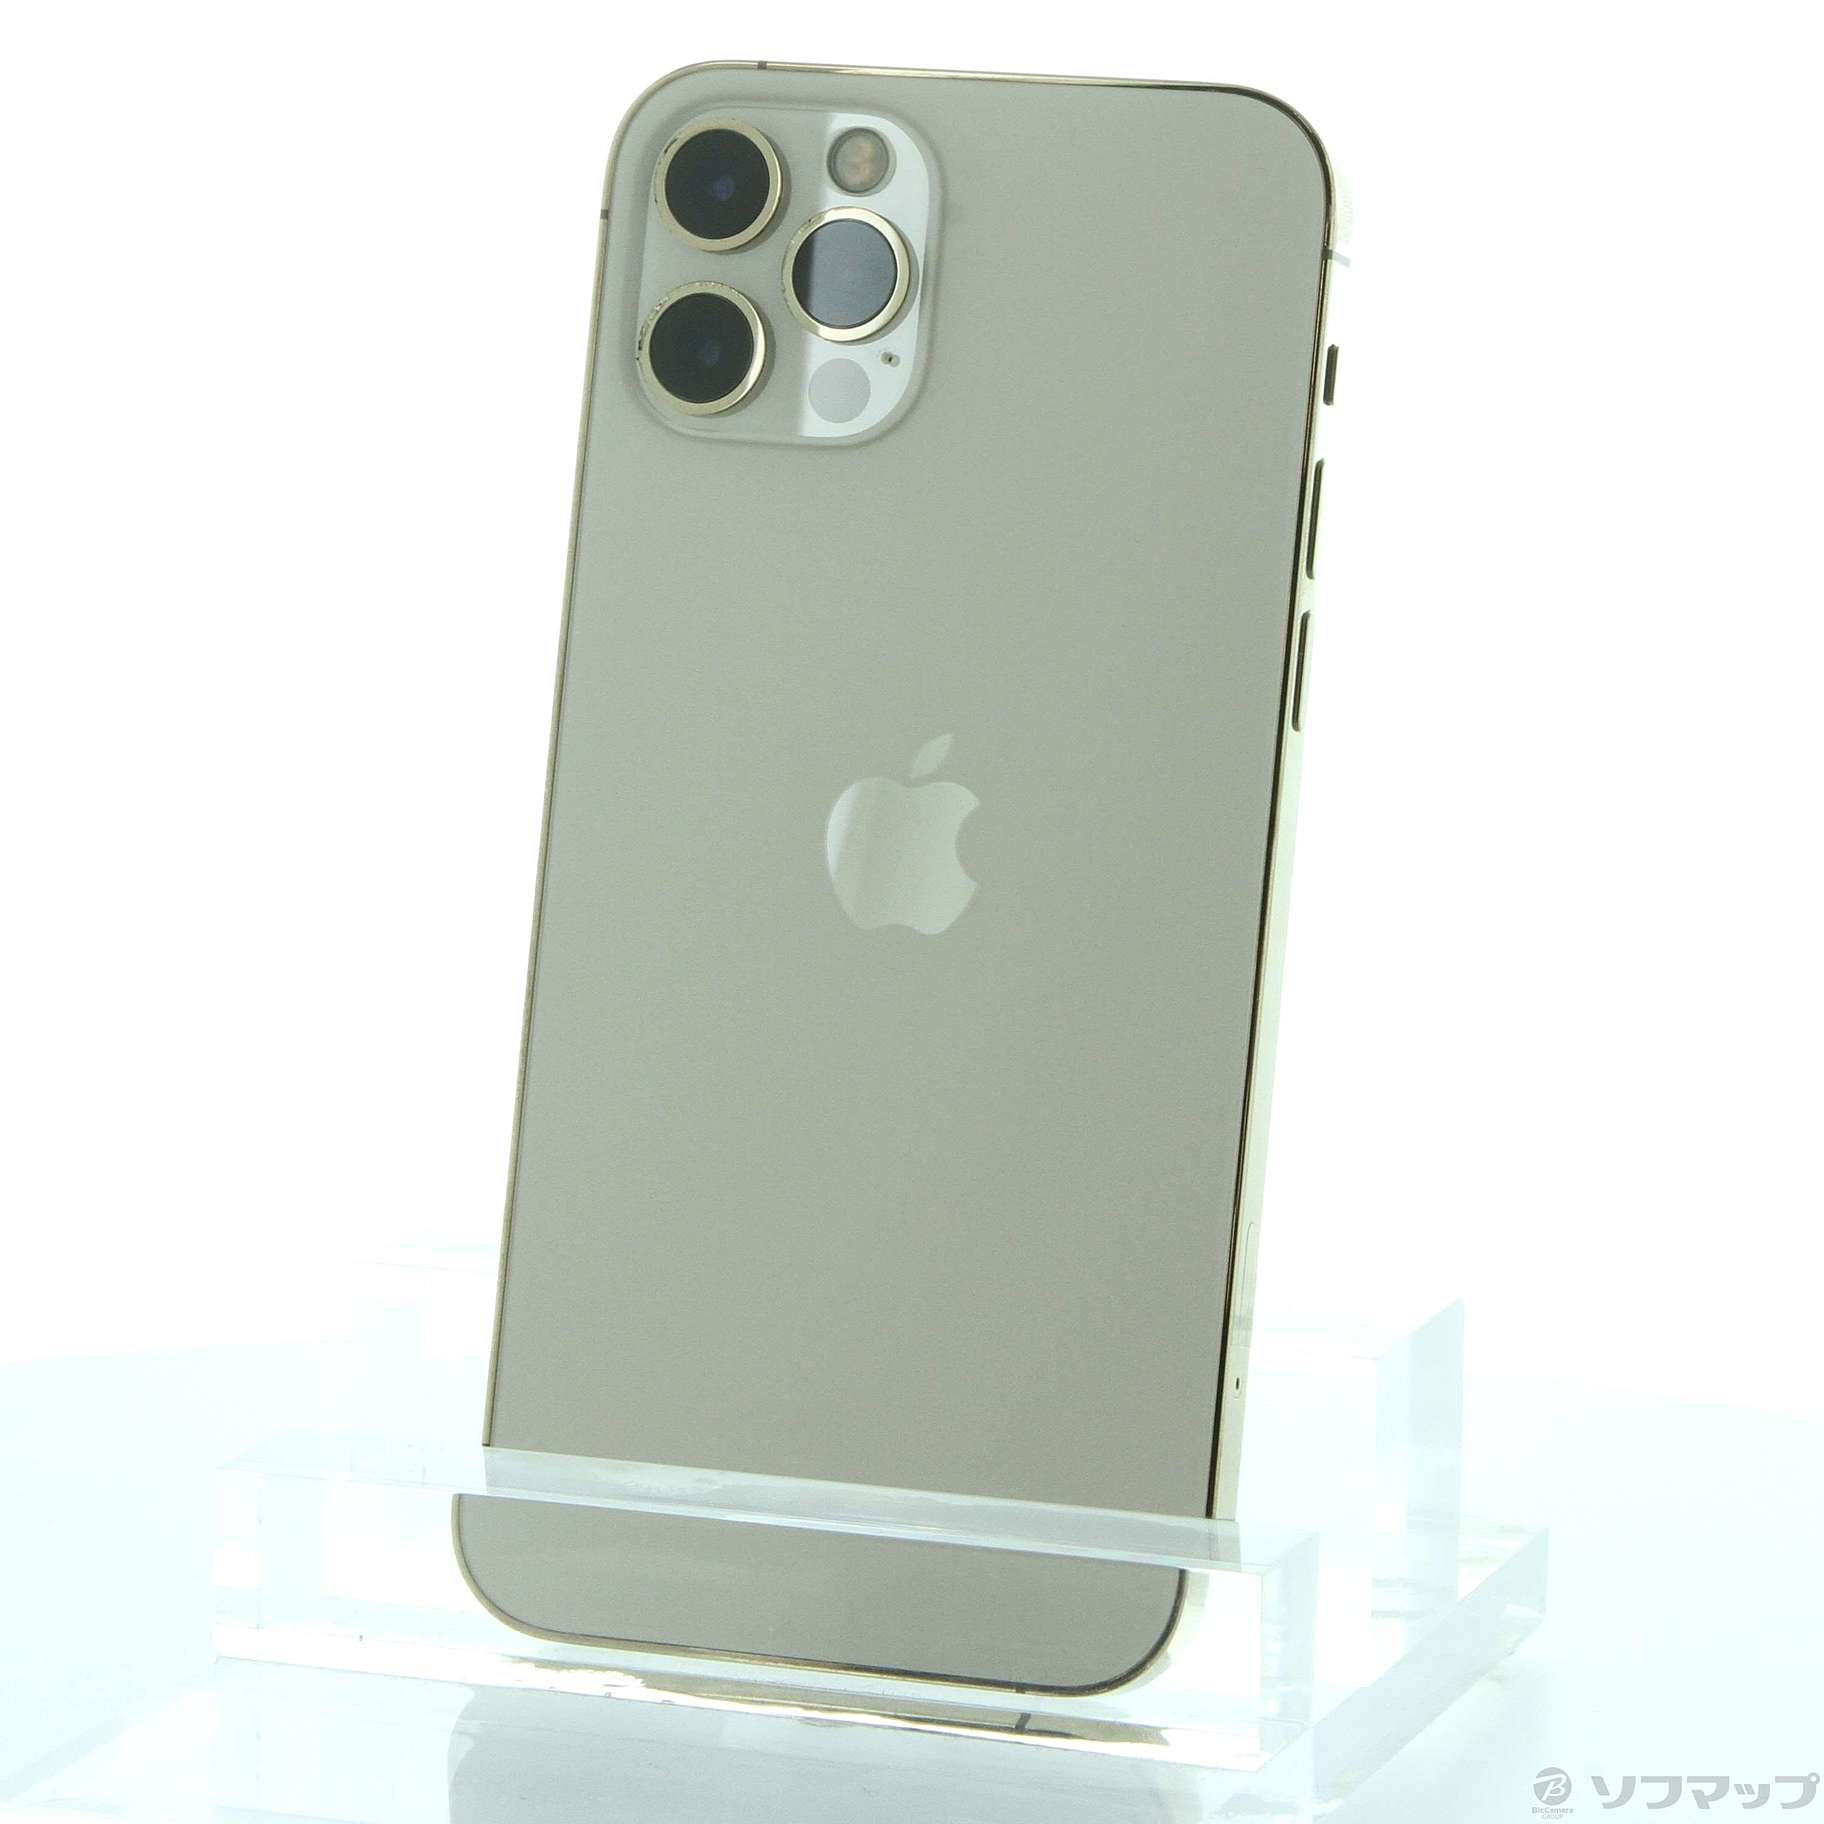 iPhone 12 Pro 512GB SIMフリー [ゴールド] 中古(白ロム)価格比較 